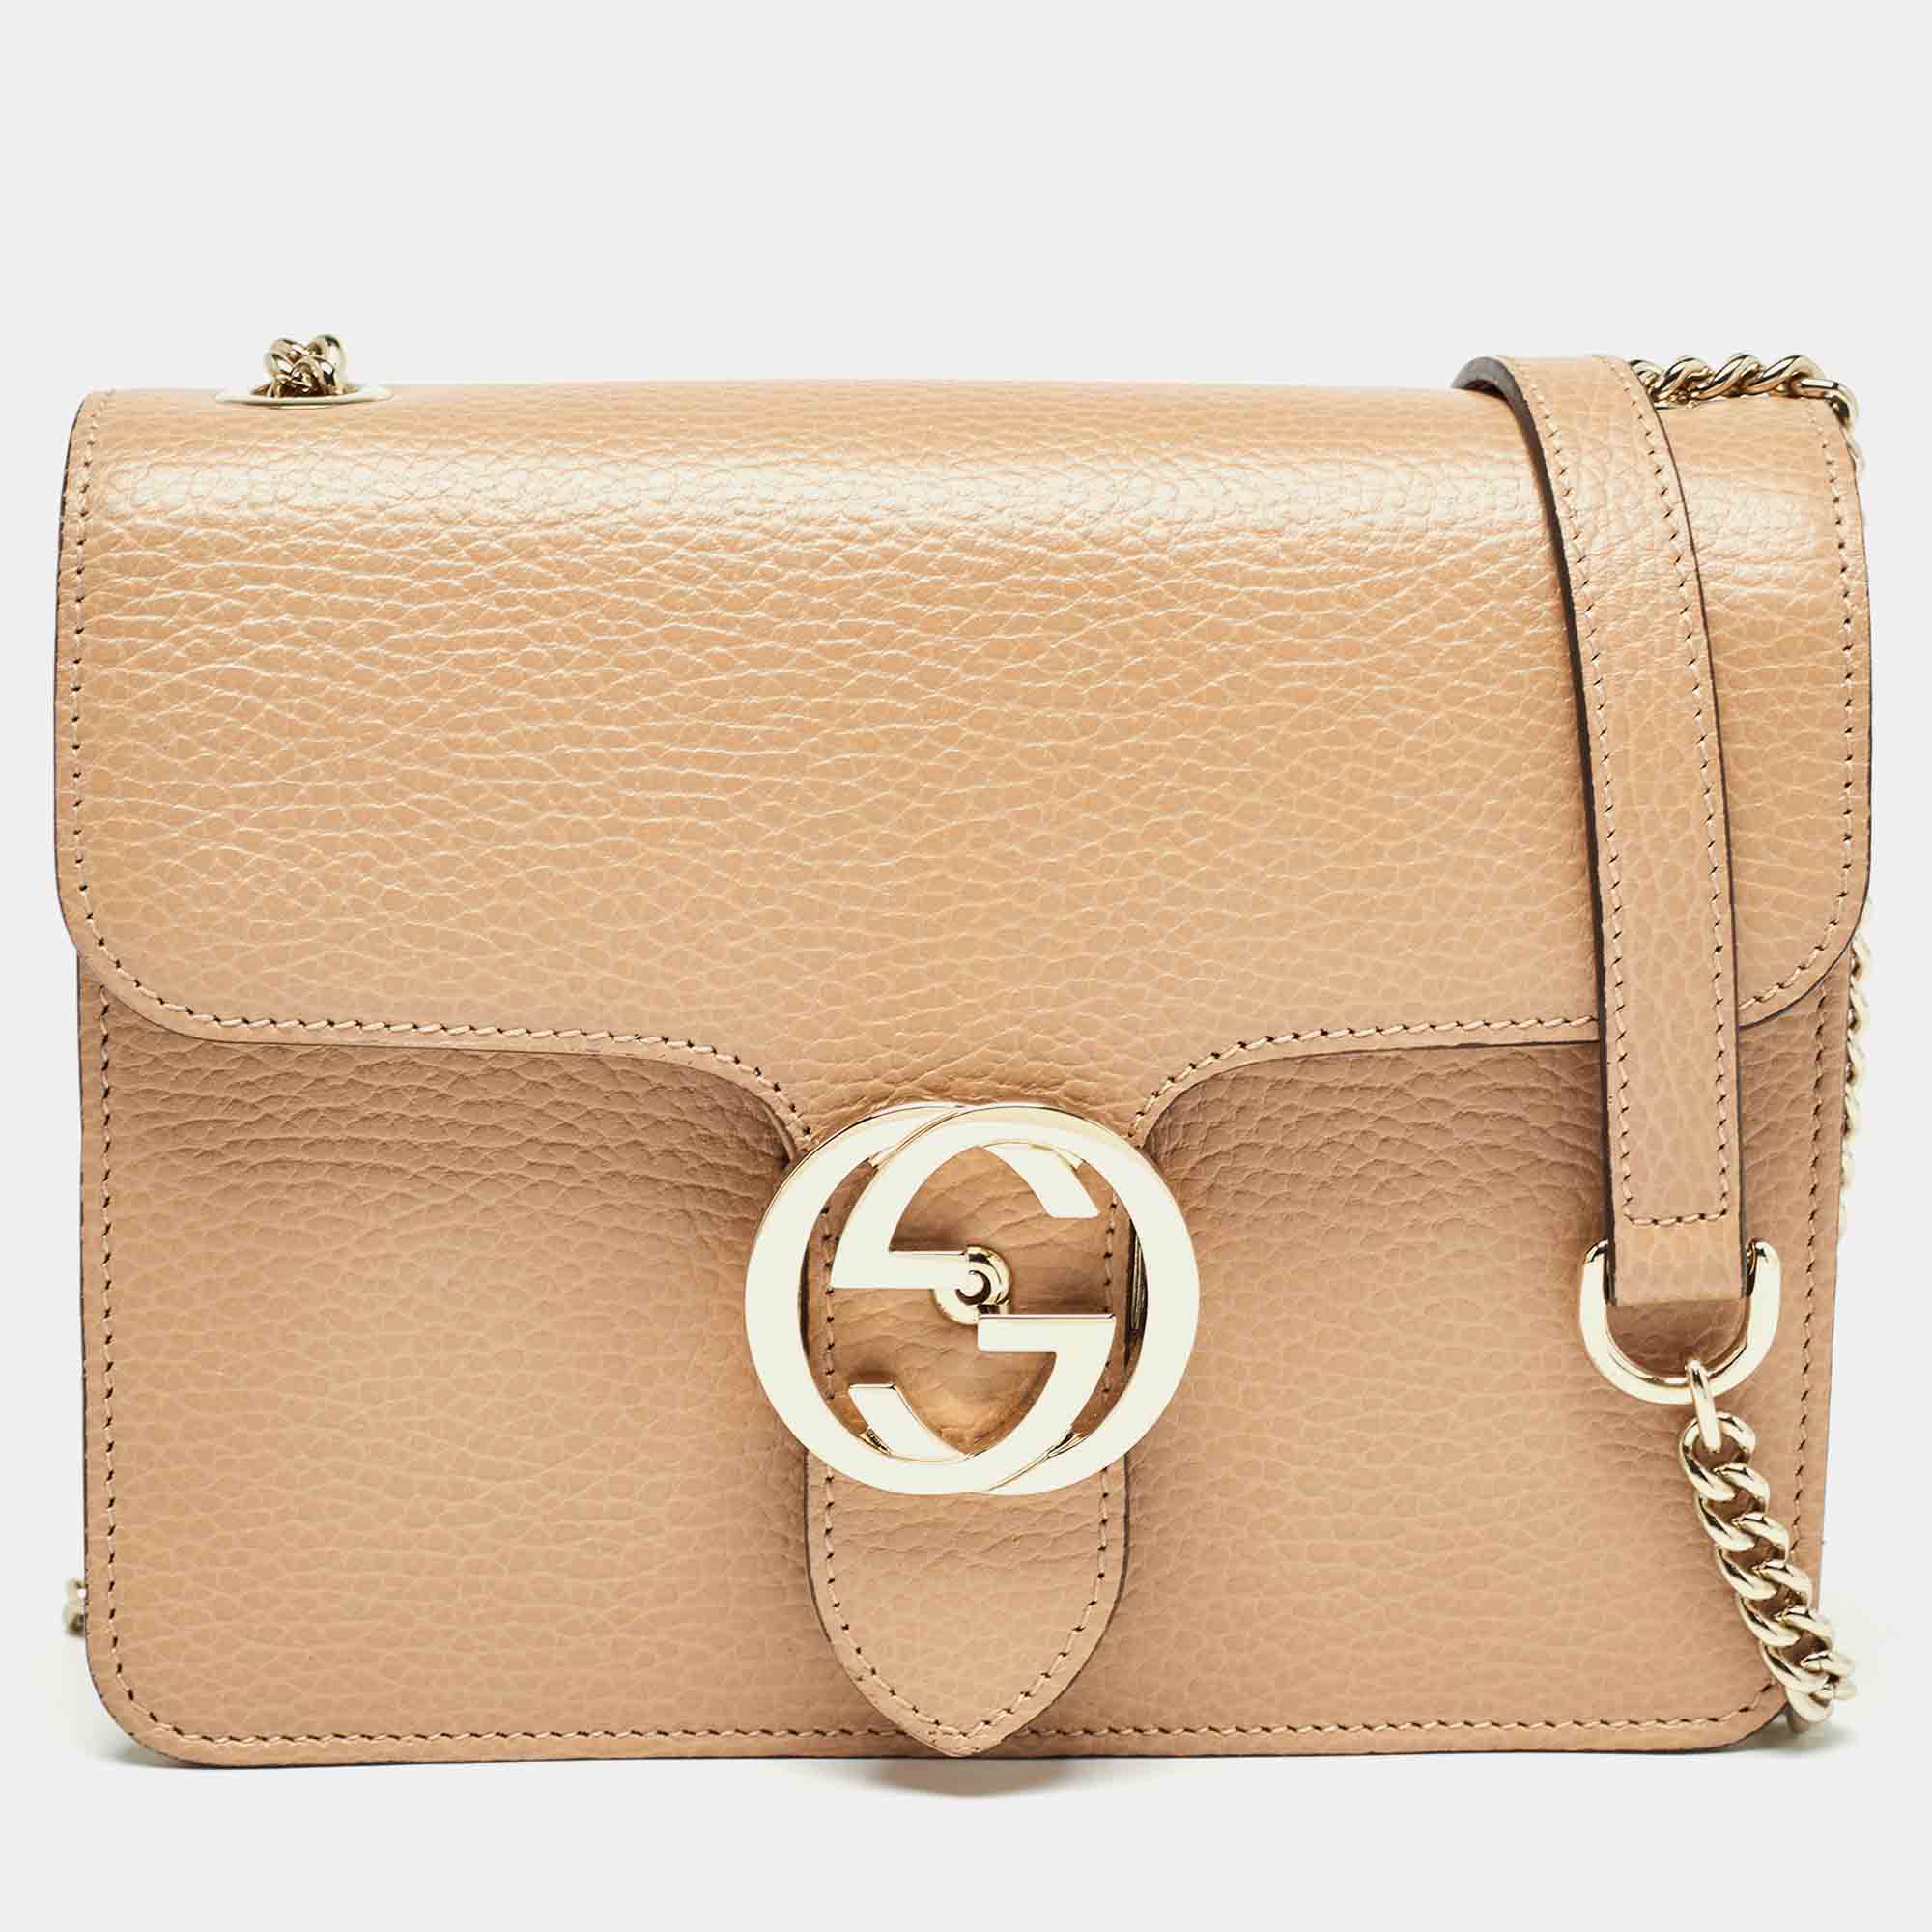 Gucci beige leather small interlocking g shoulder bag